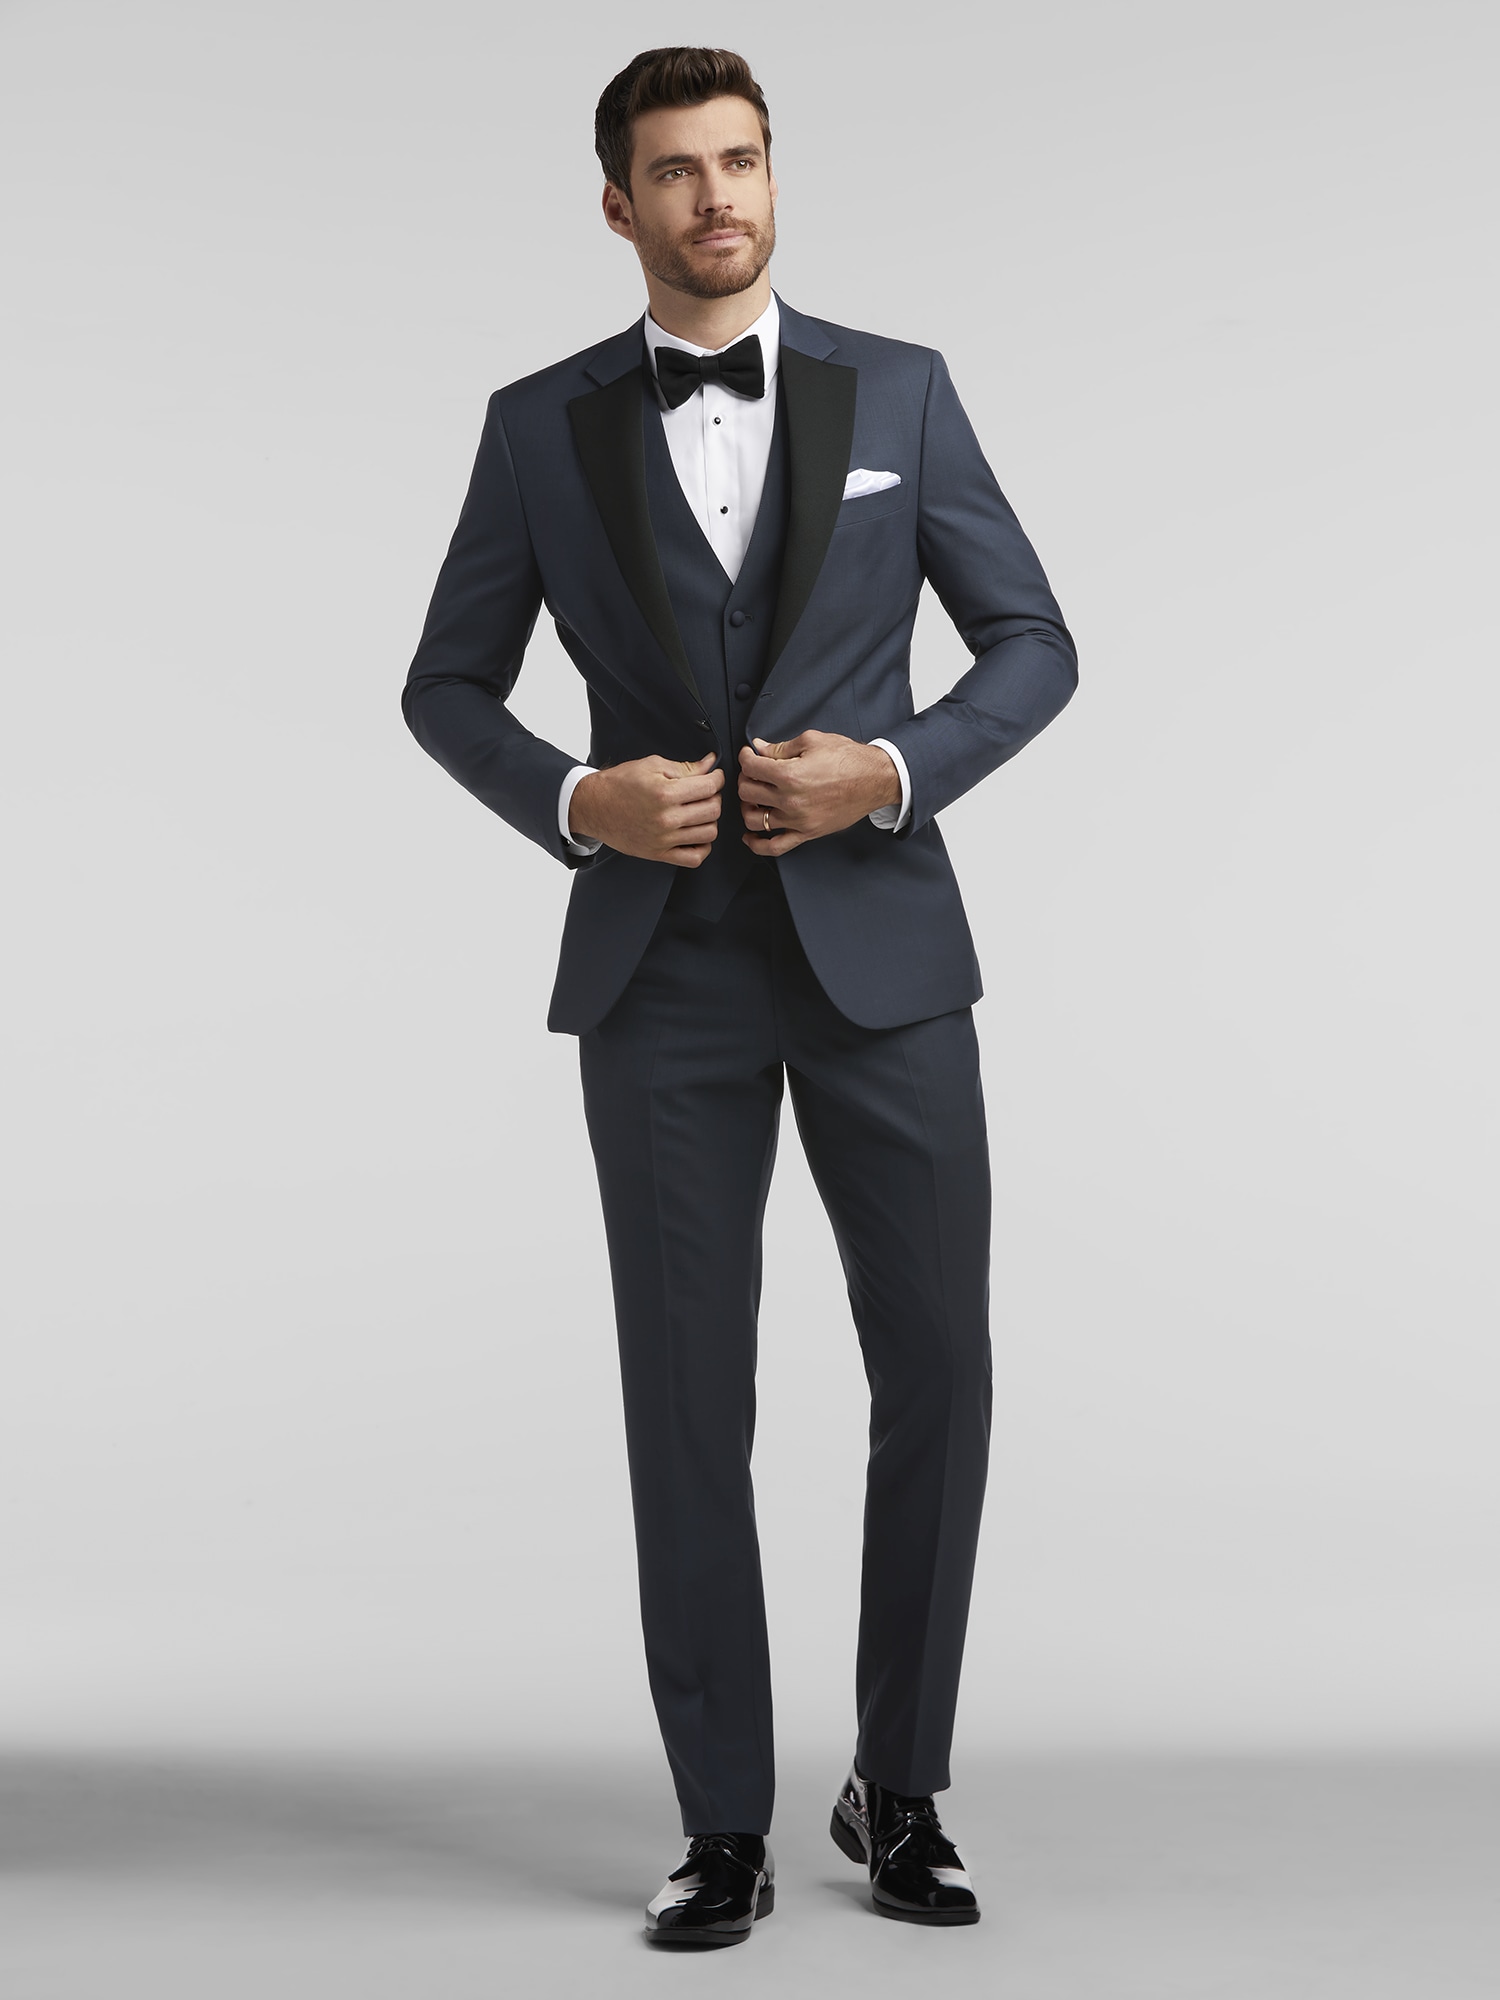 Blue Wedding Suit by Calvin Klein | Suit Rental